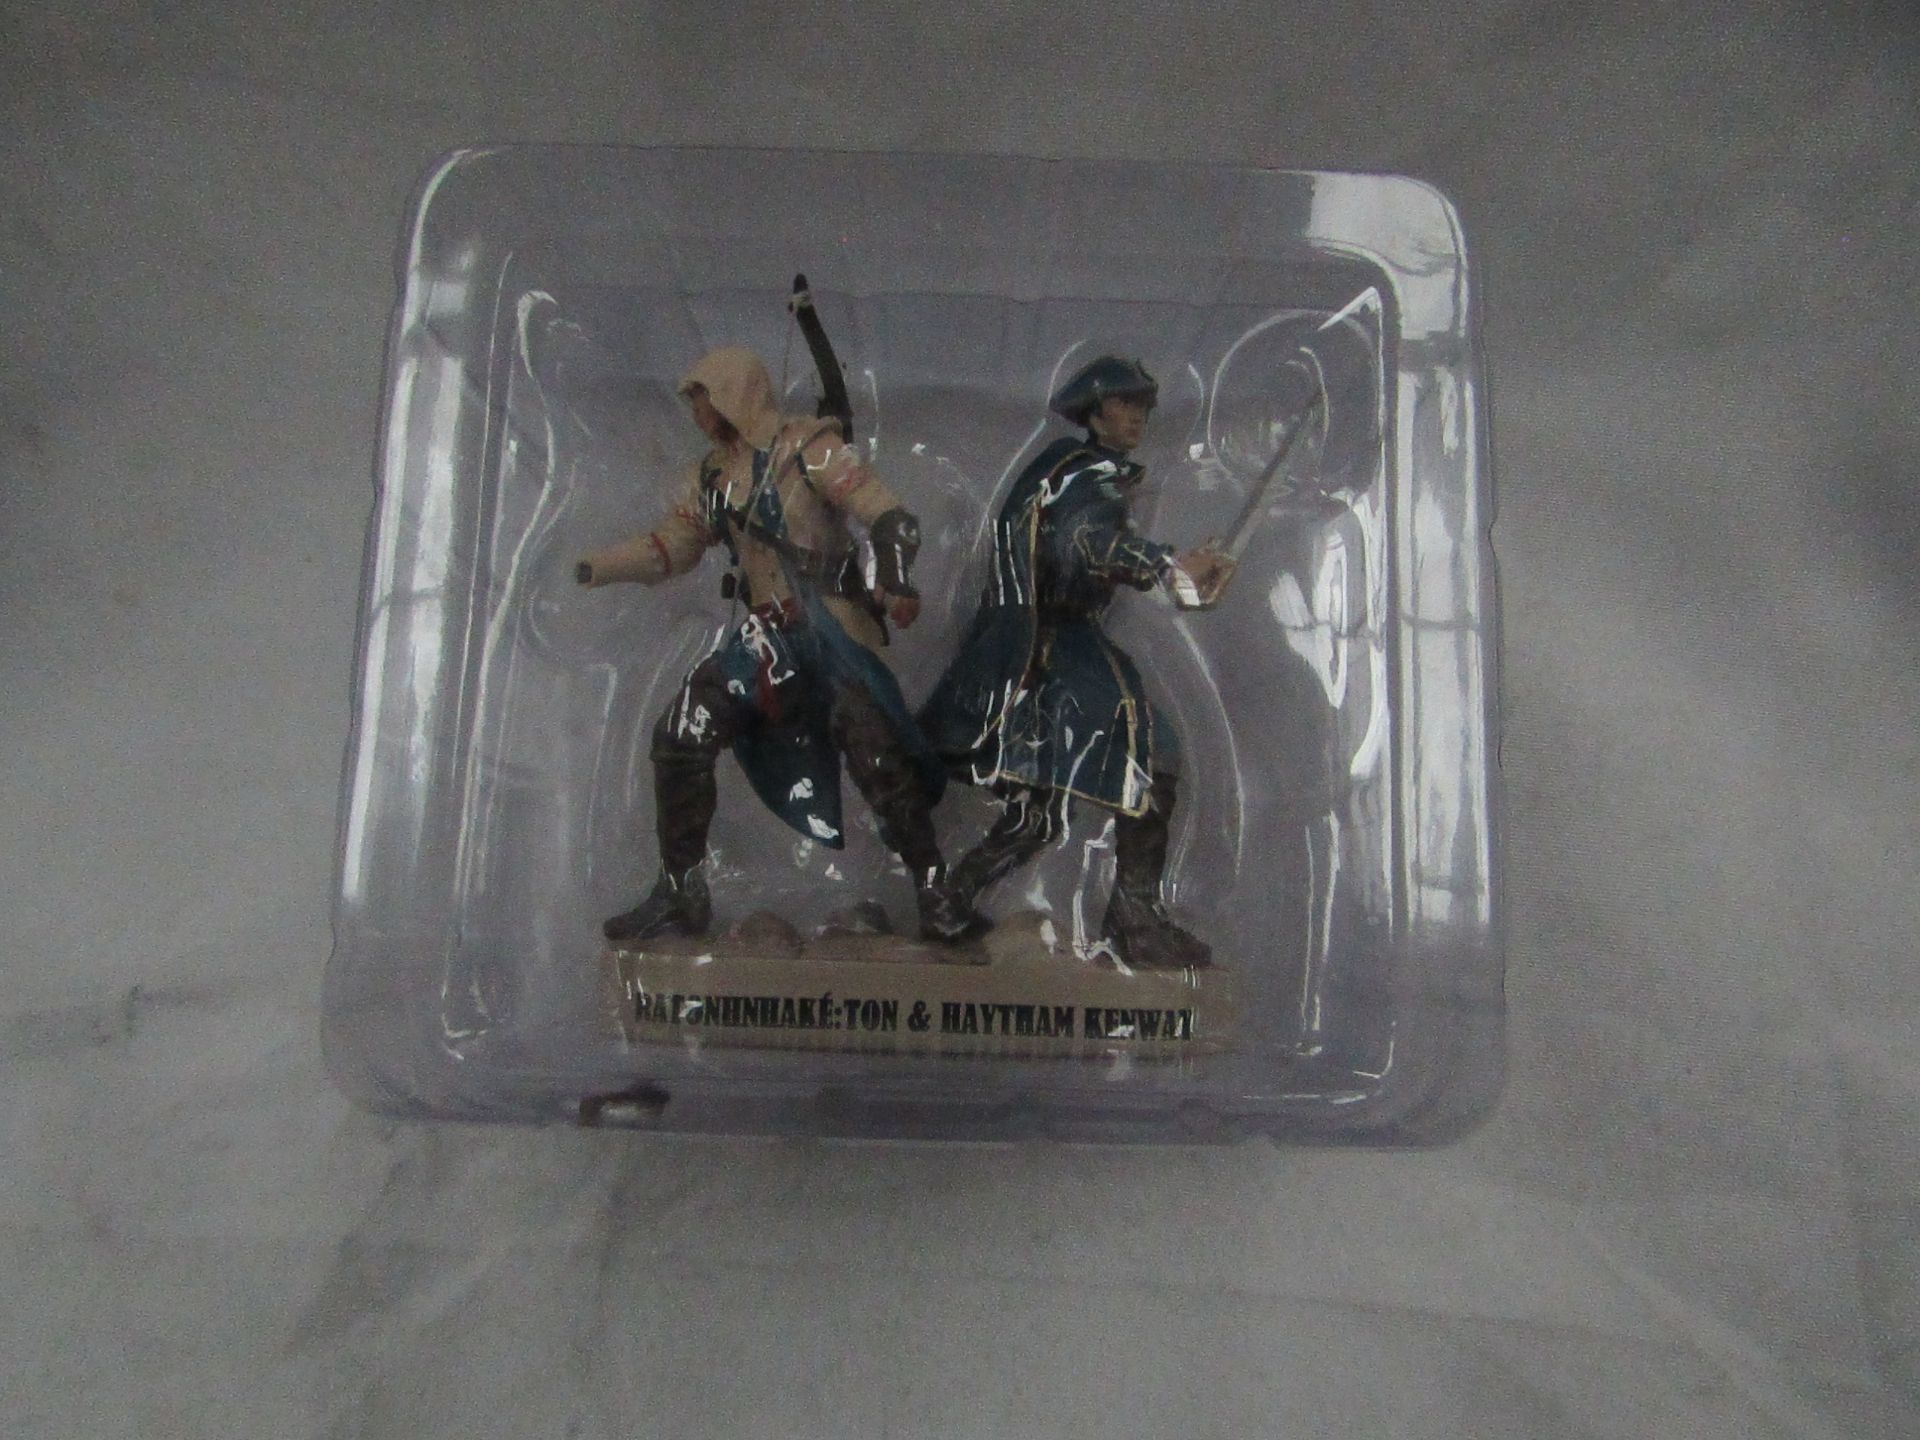 Assassins Creed - Special Edition Duo Figurine ( Ratonhnhake Ton & Haytham Kenway ) - Good Condition